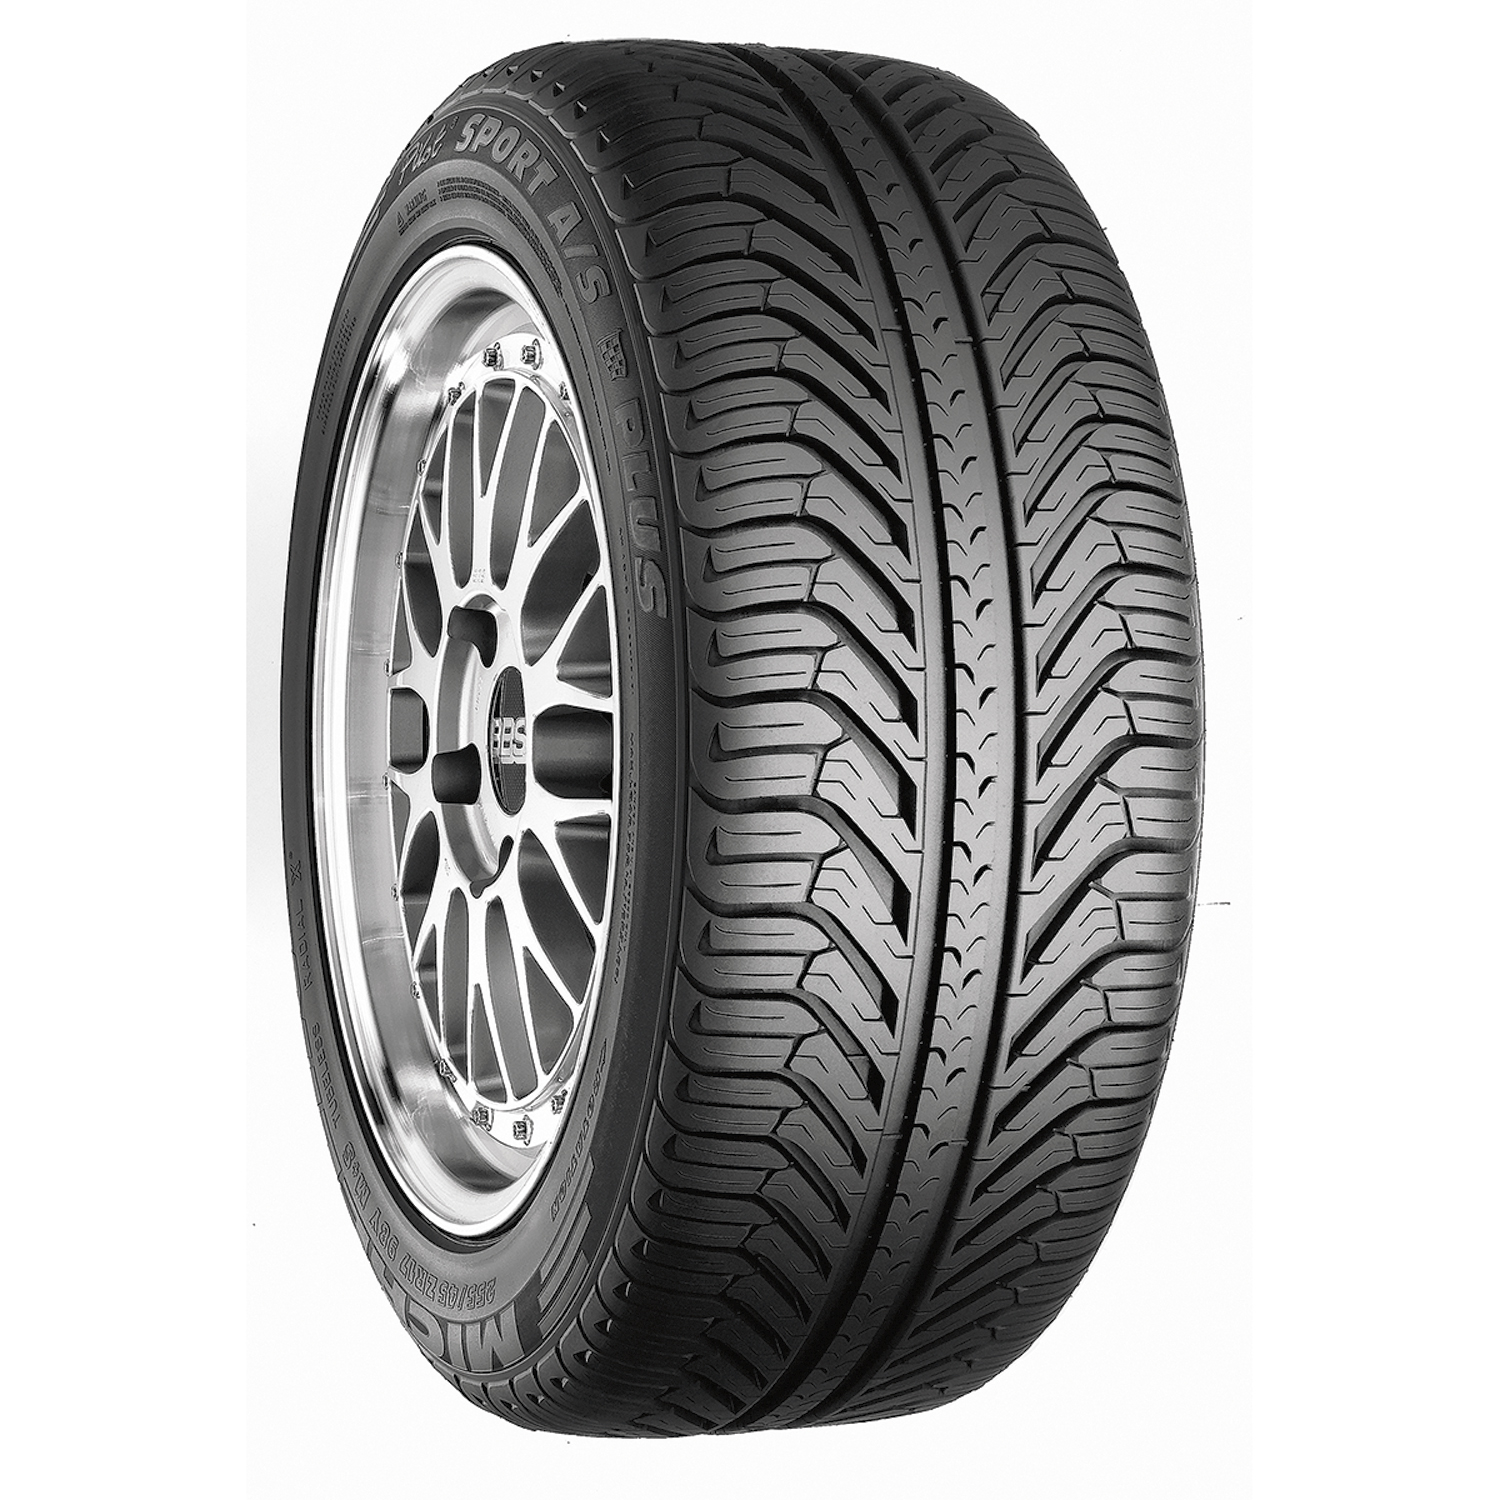 Michelin Pilot Sport A/S Plus - 275/40ZR18 99Y - All Season Tire